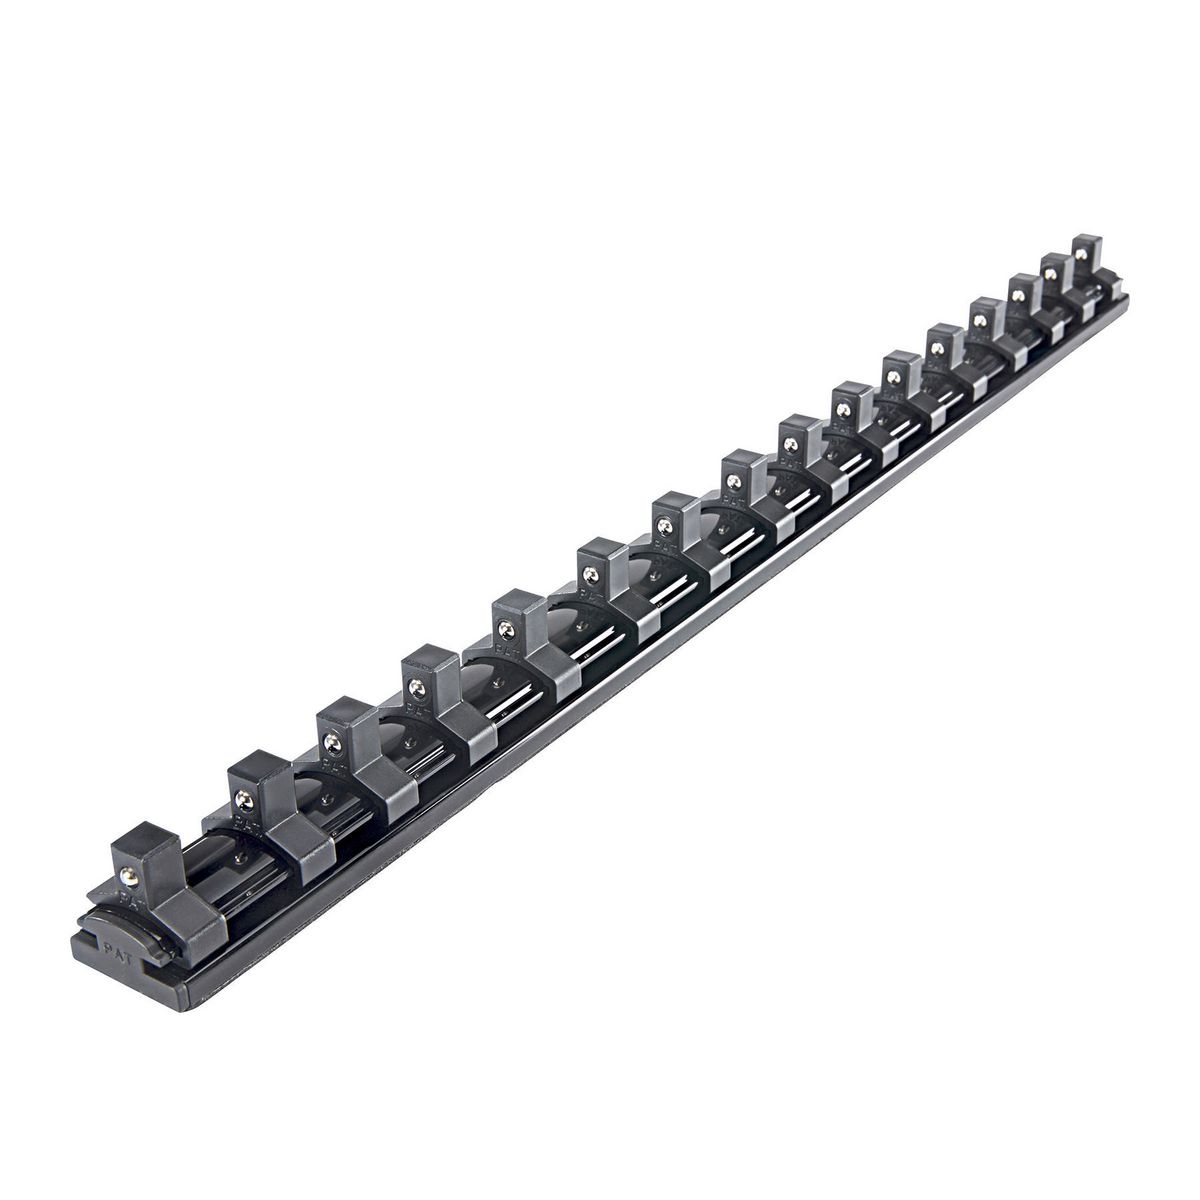 U.S. GENERAL 1/4 in. Magnetic Socket Rail - Black - Item 70020